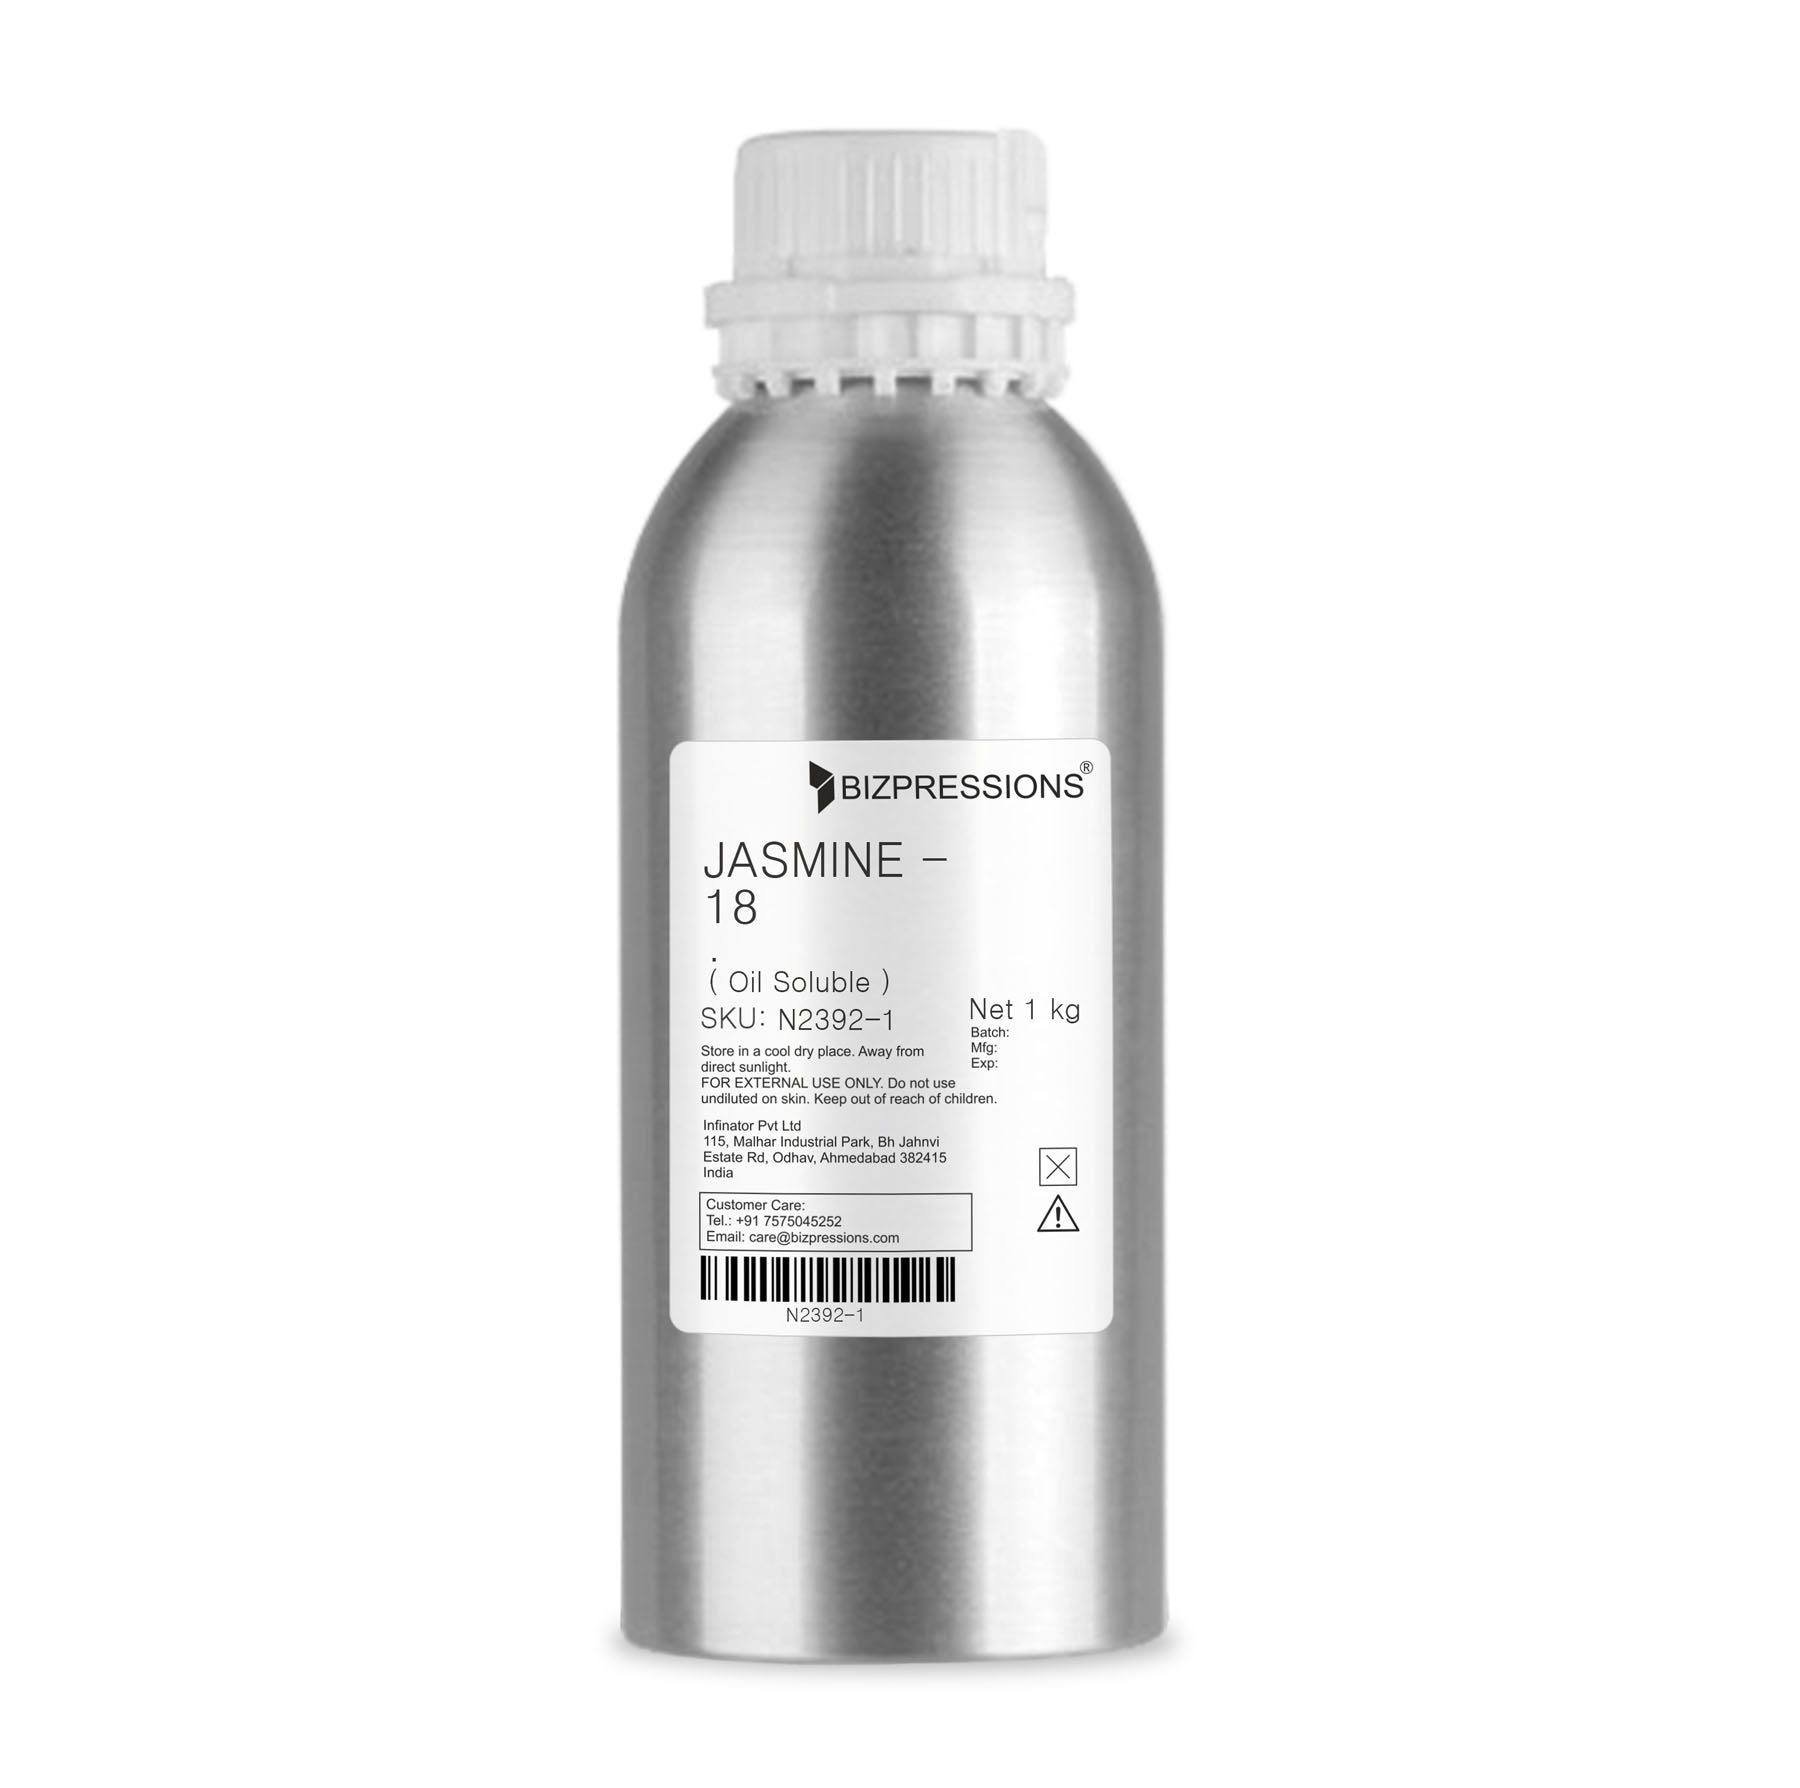 JASMINE - 18 - Fragrance ( Oil Soluble ) - 1 kg